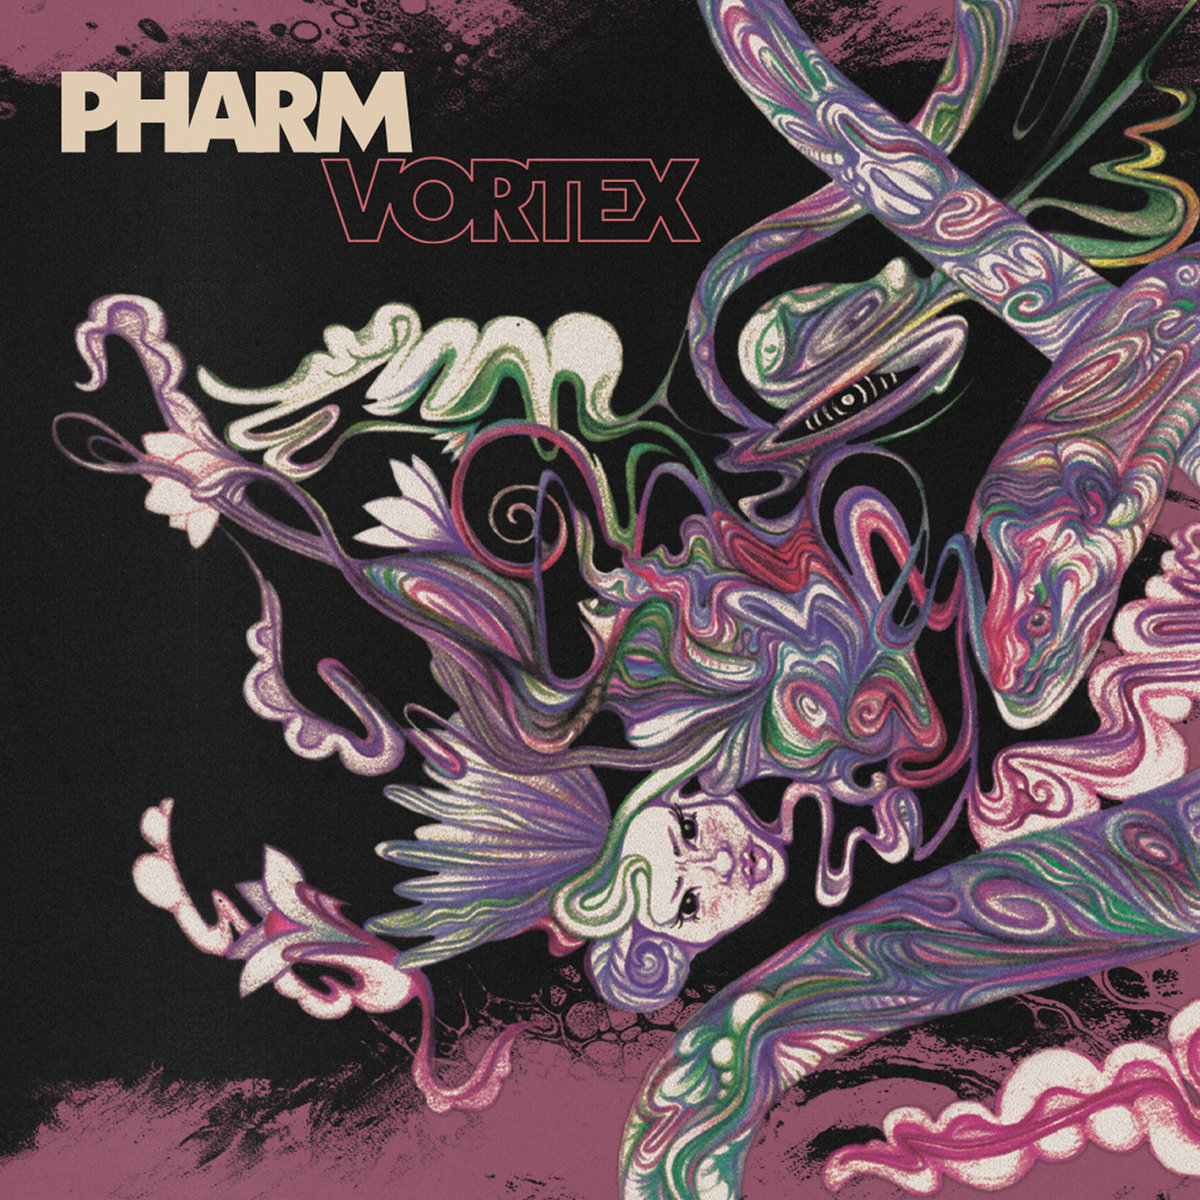 Album Review: Vortex by Pharm